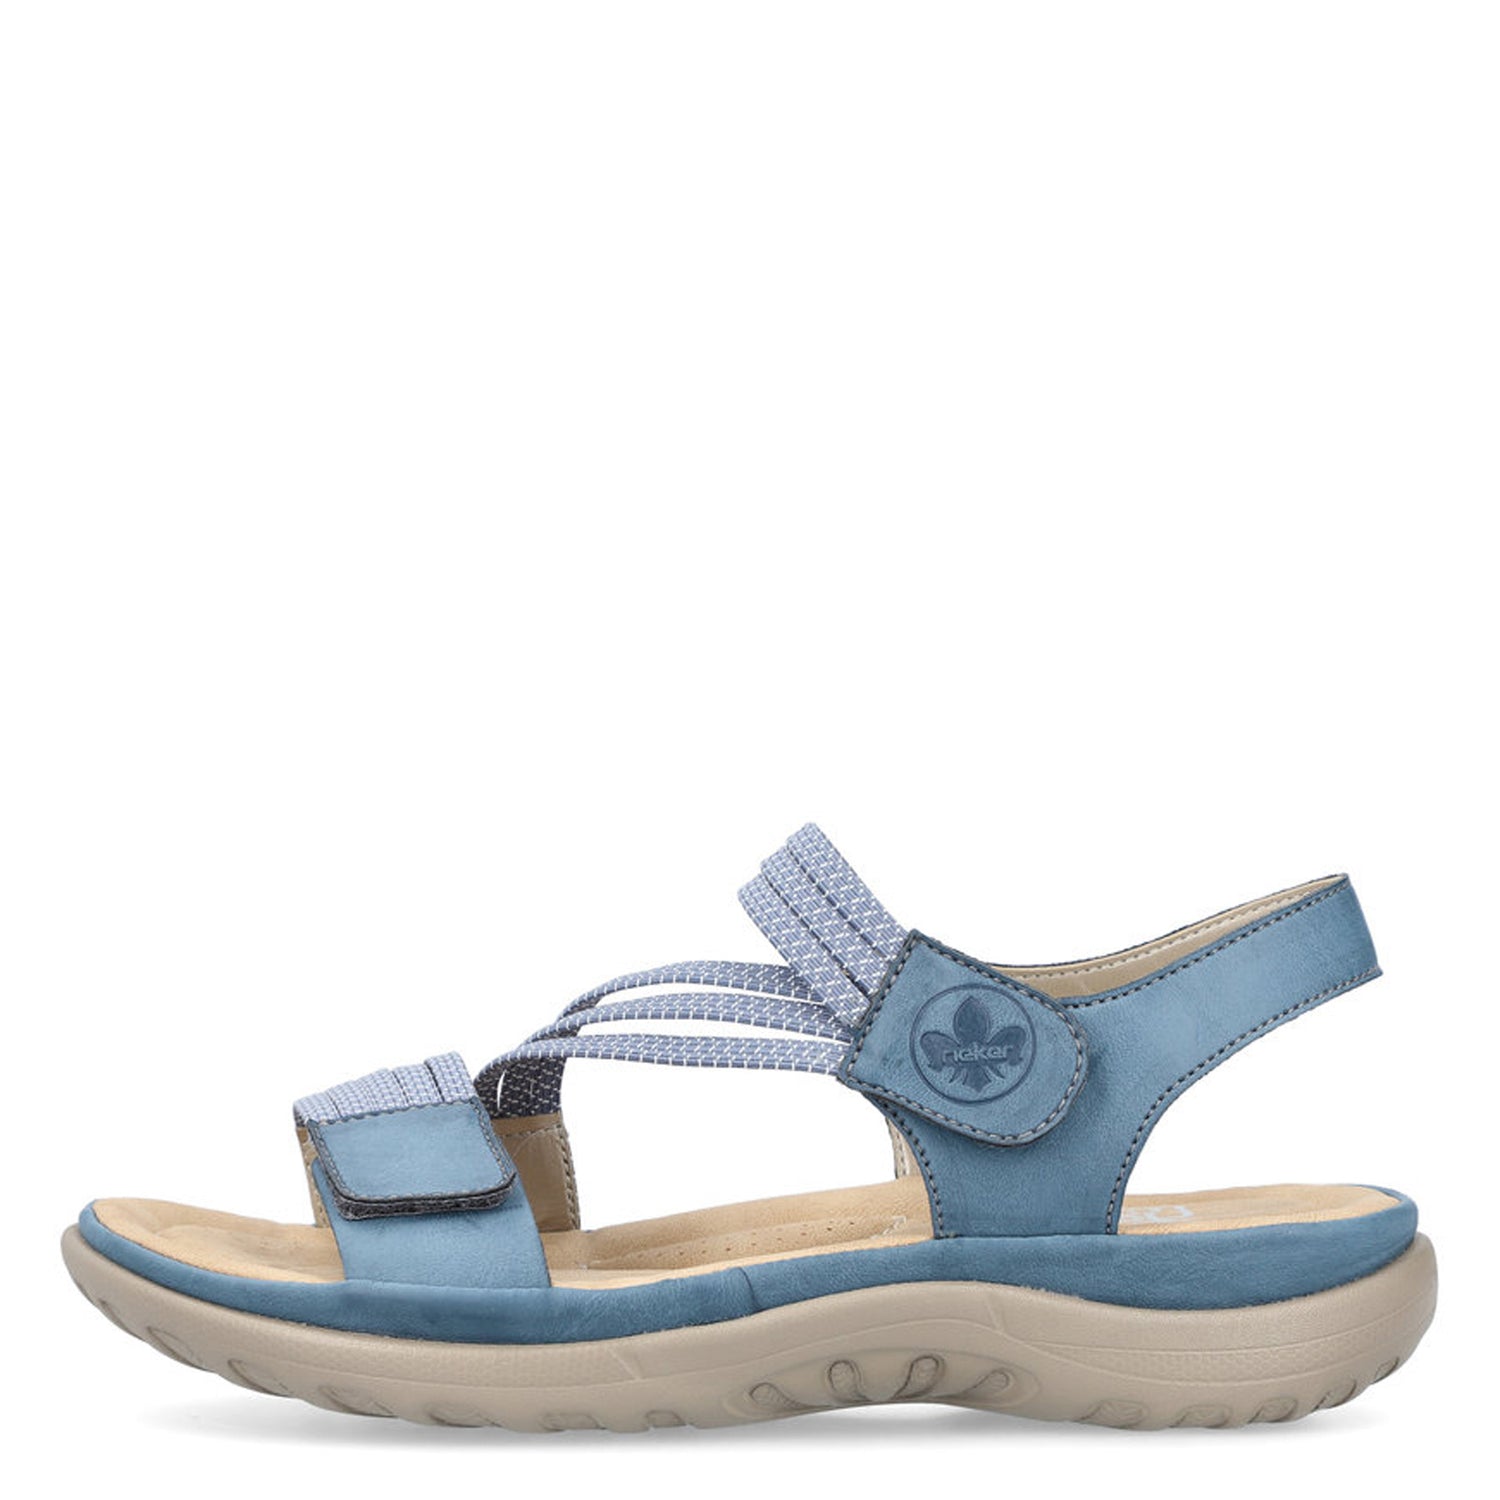 Peltz Shoes  Women's Rieker 64870 Sandal BLUE 64870-14